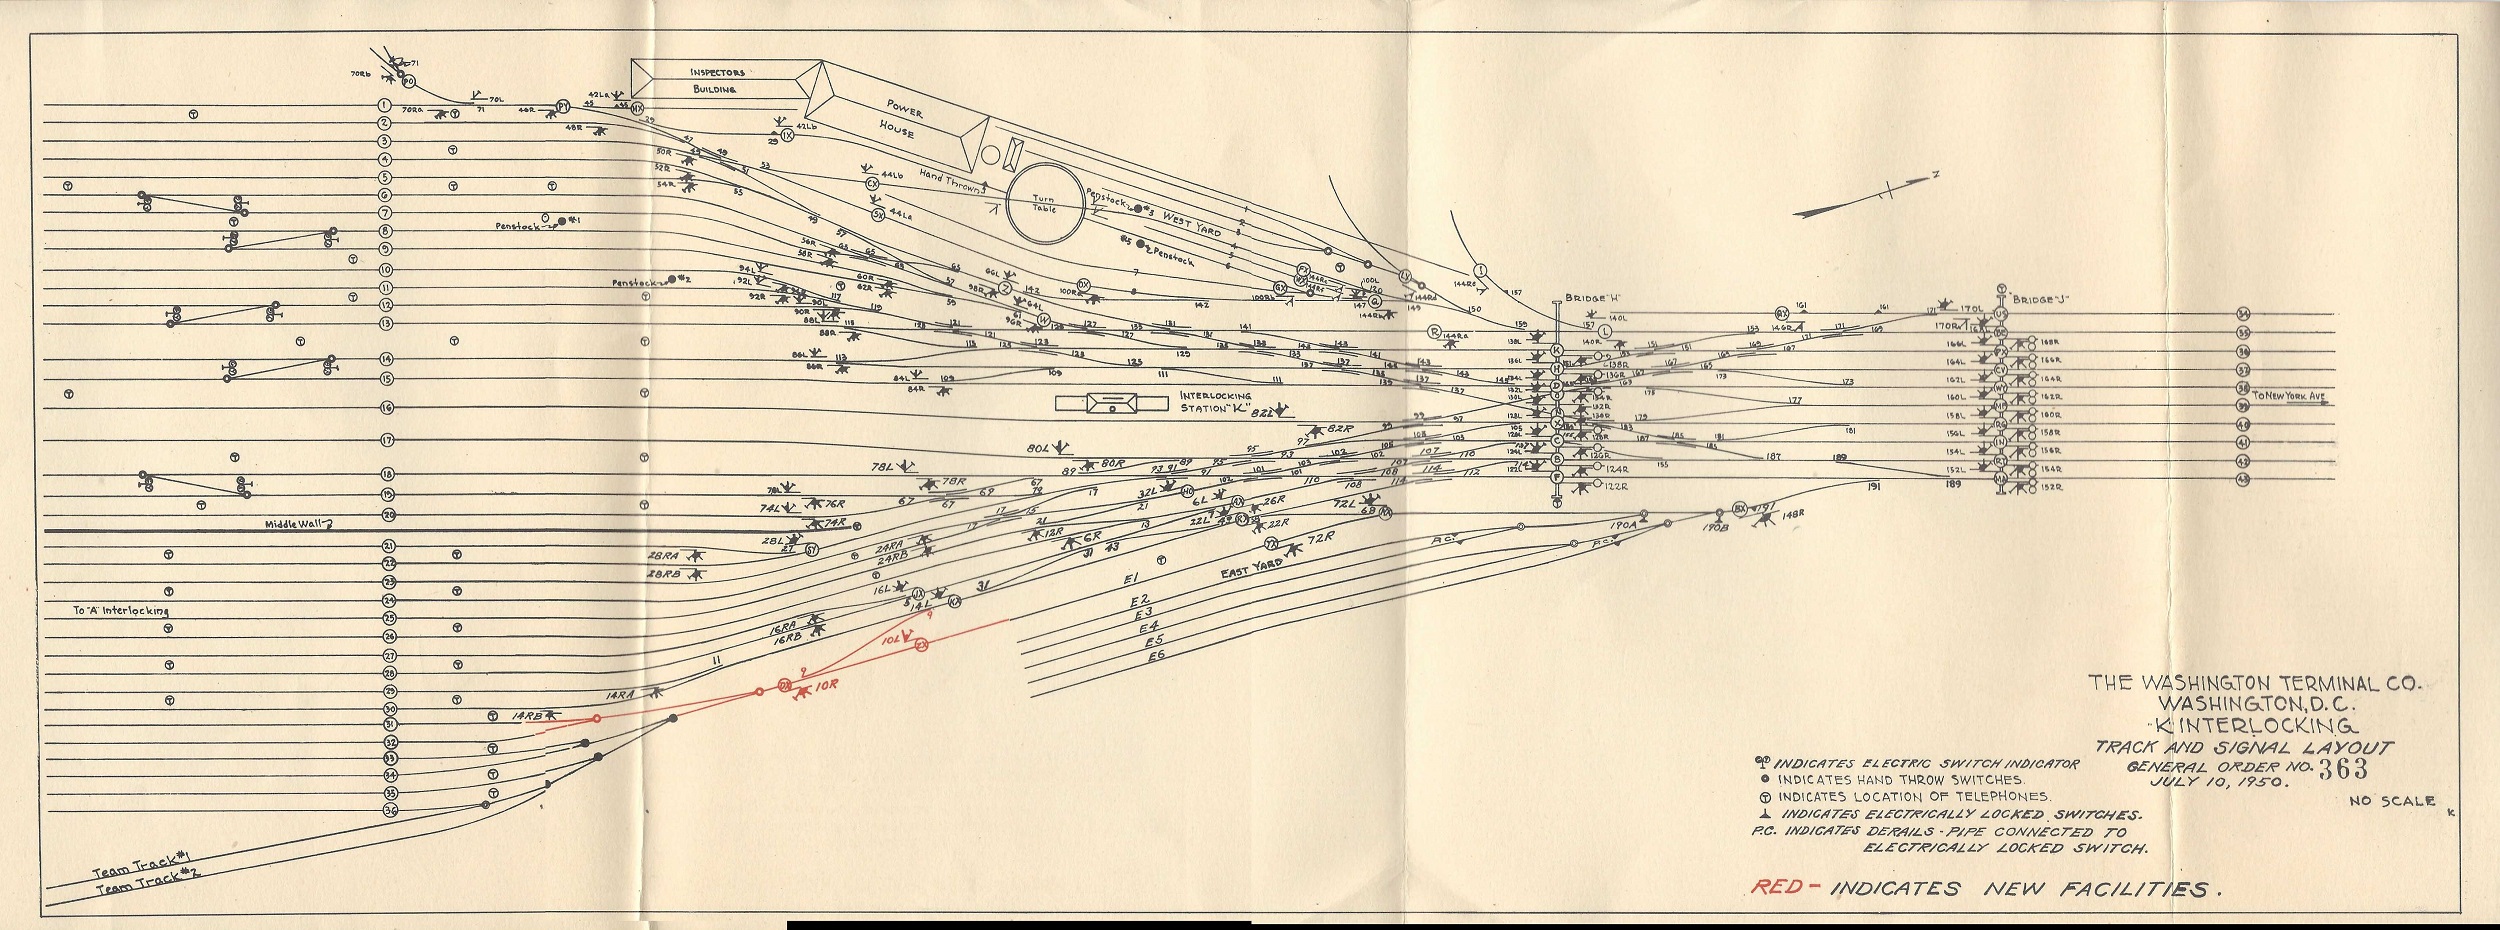 Station Area Track Plan circa 1950